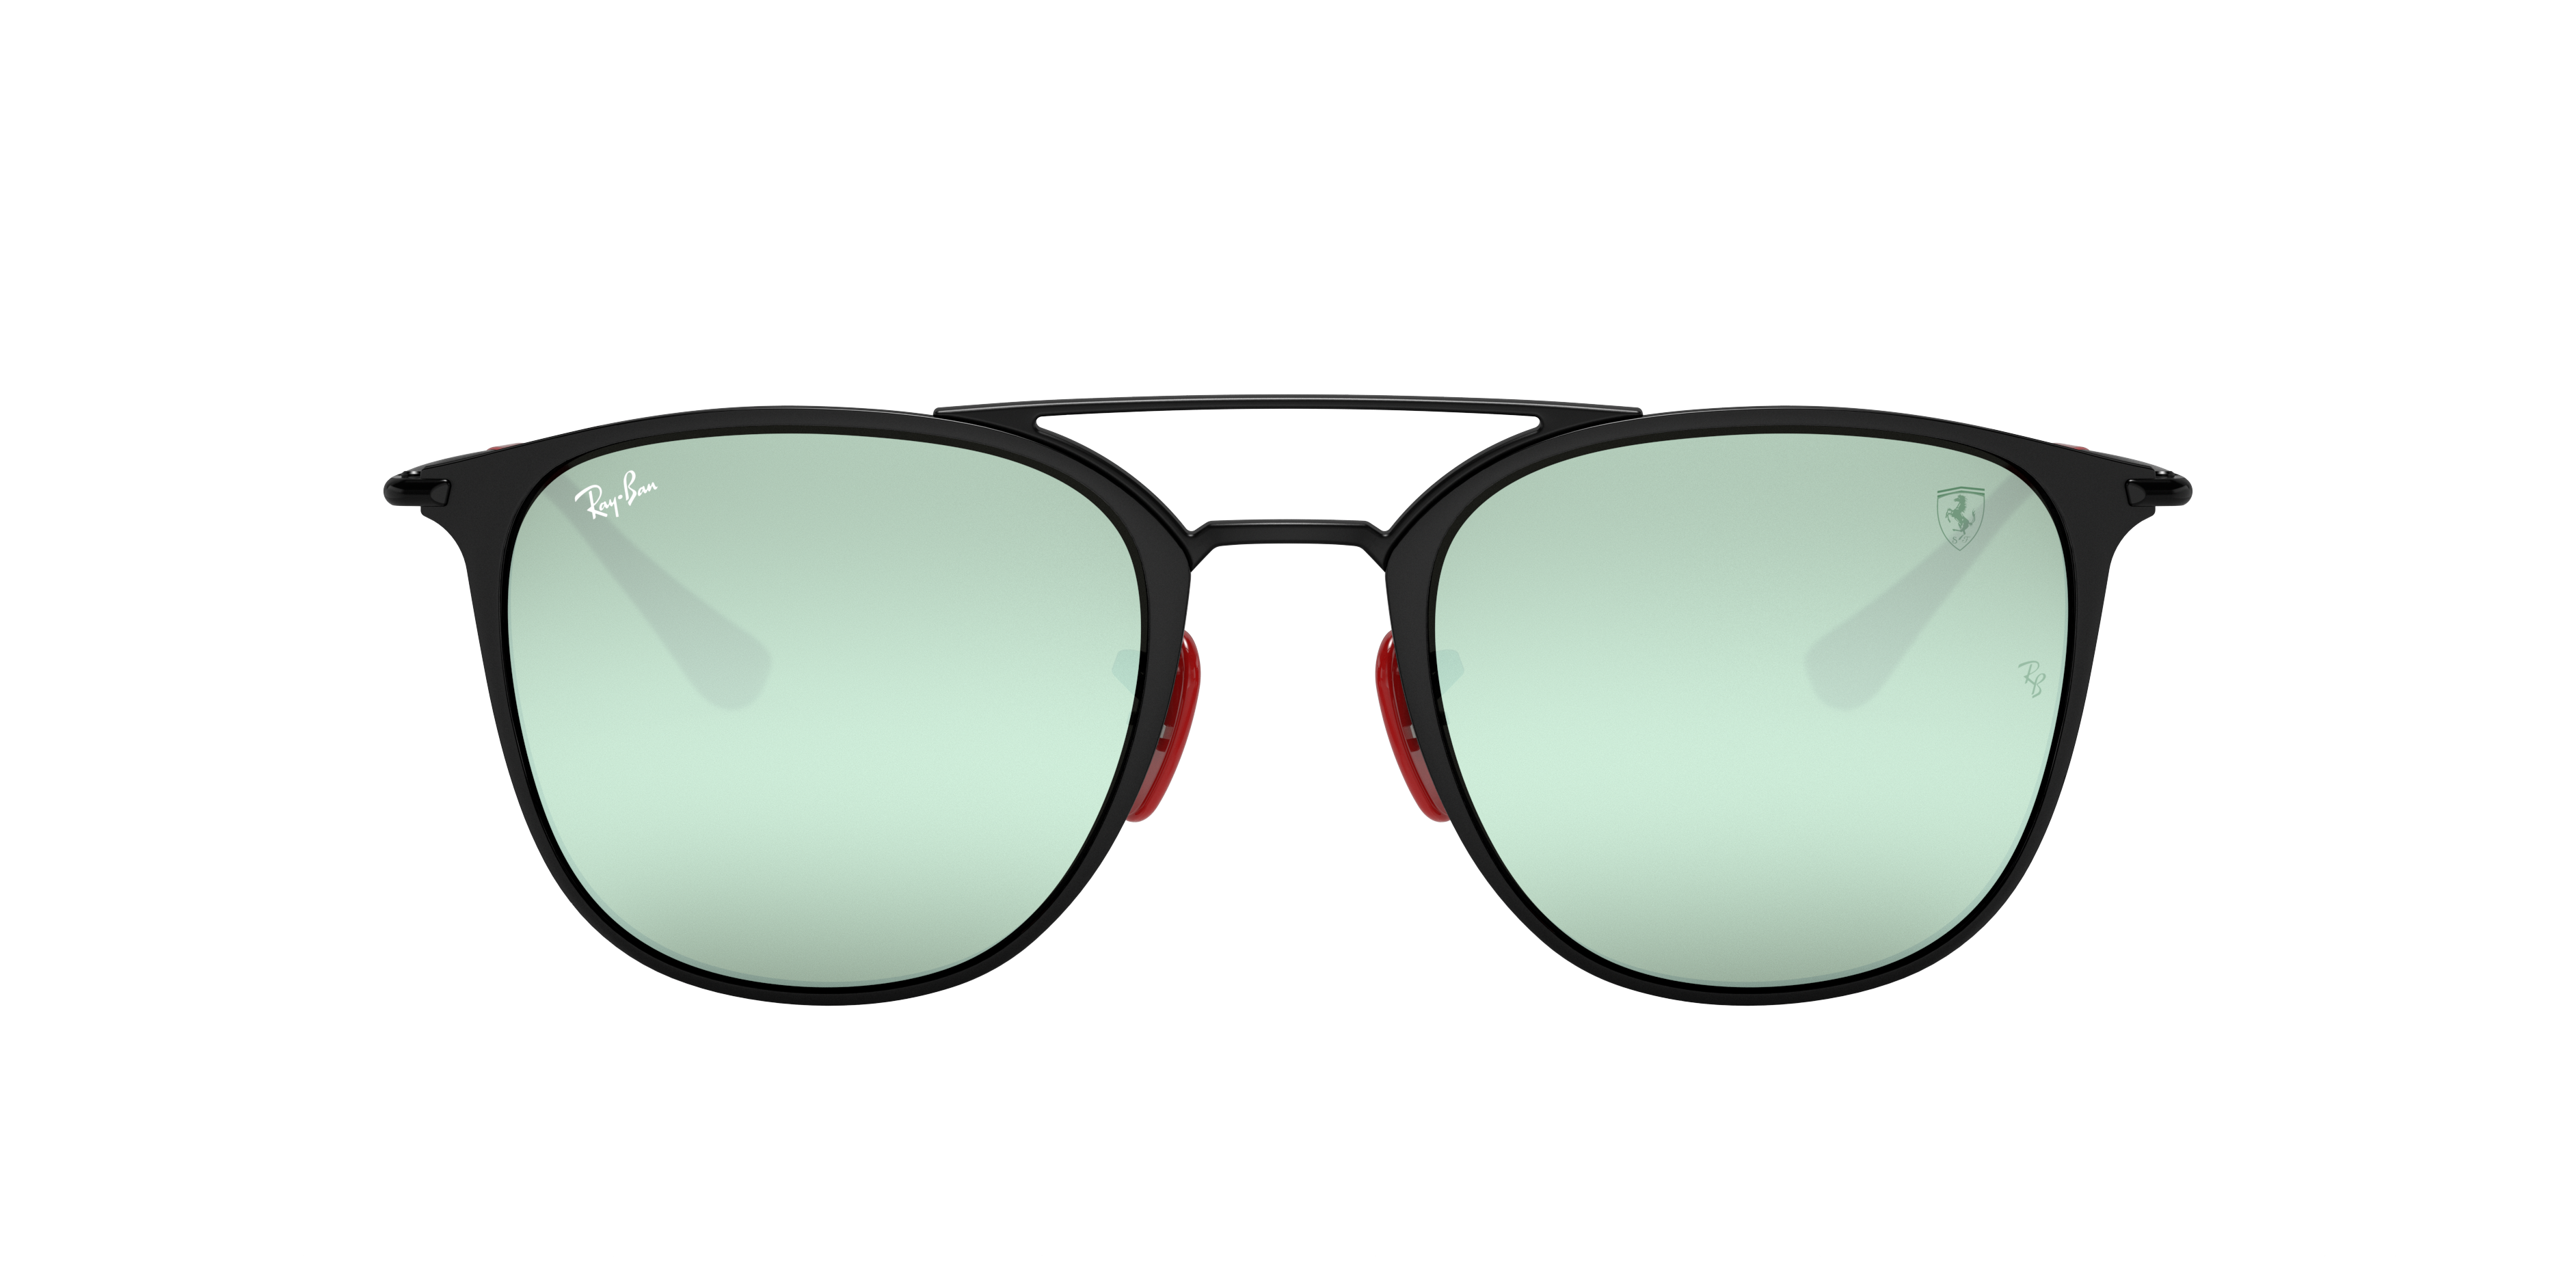 ray ban ferrari aviator sunglasses